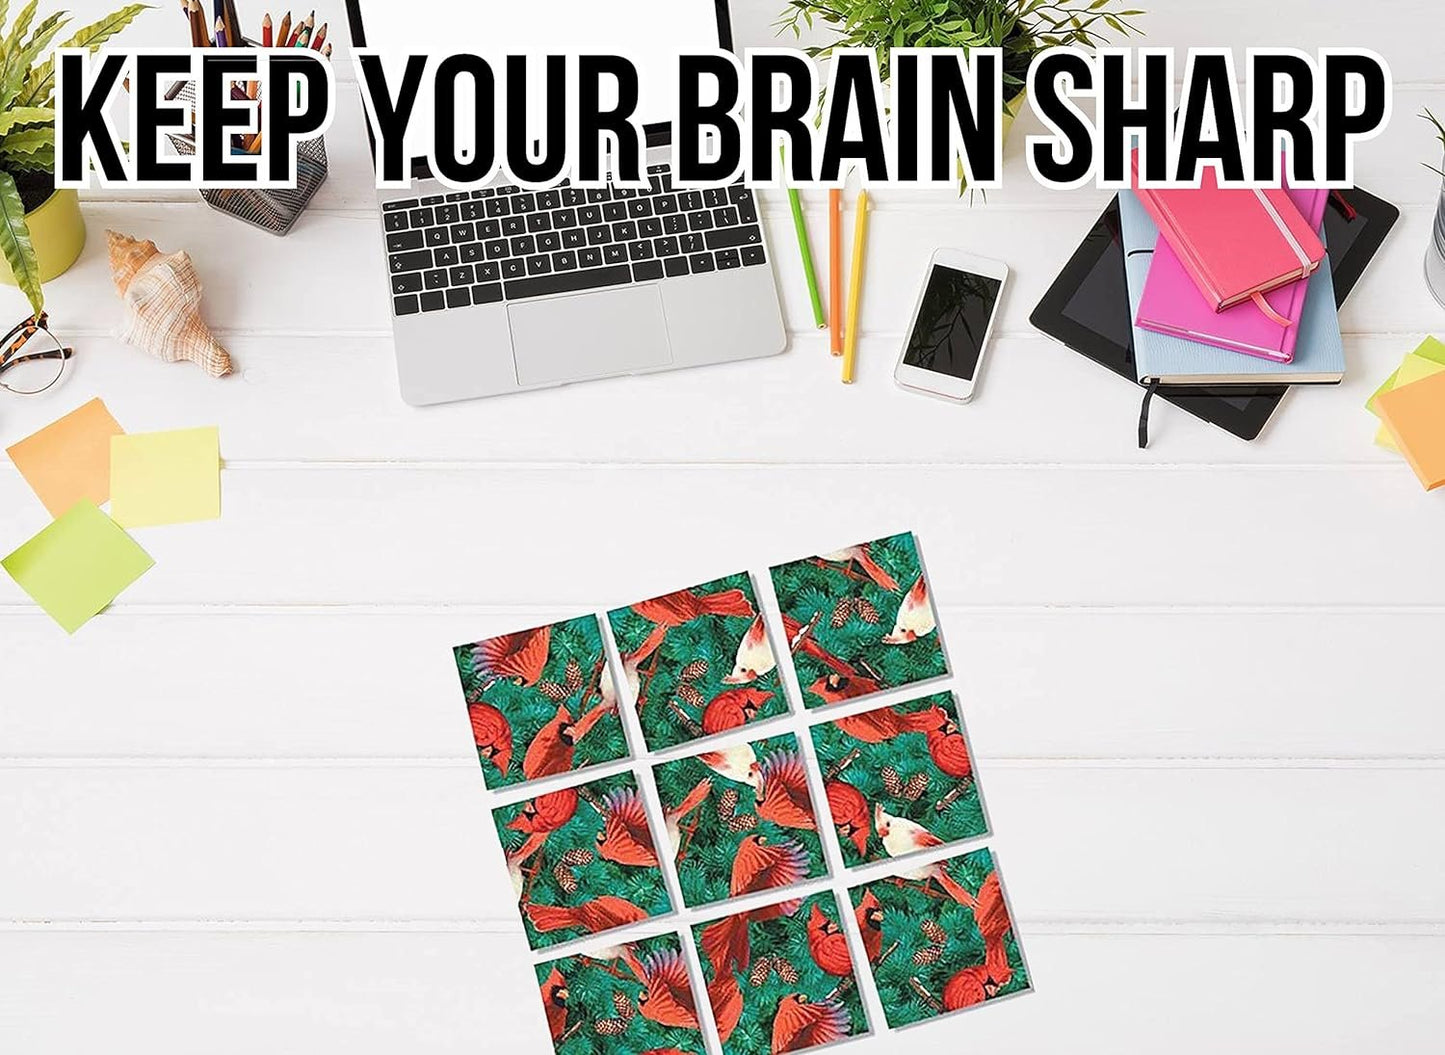 B. Dazzle - Cardinals 9 Piece Scramble Square Puzzle - Challenging Brain Teaser for Children & Adults-Boosts Cognitive Function & Problem Solving